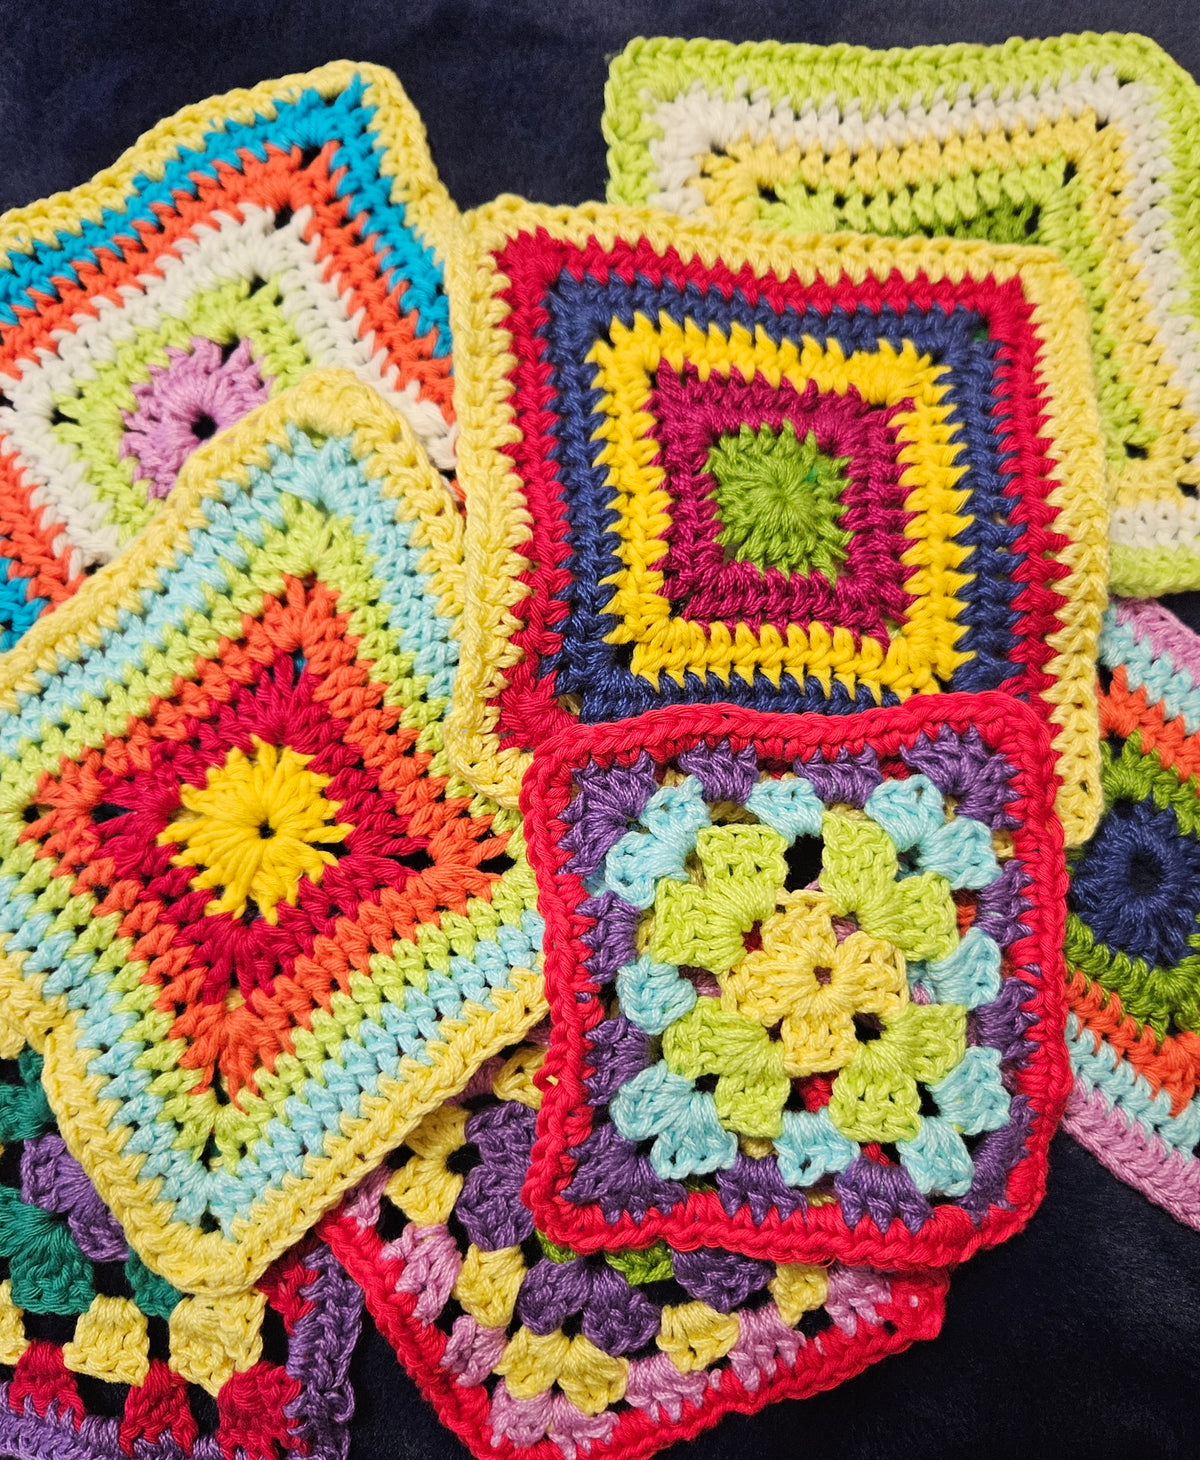 Class: Crochet 104 - Granny Squares